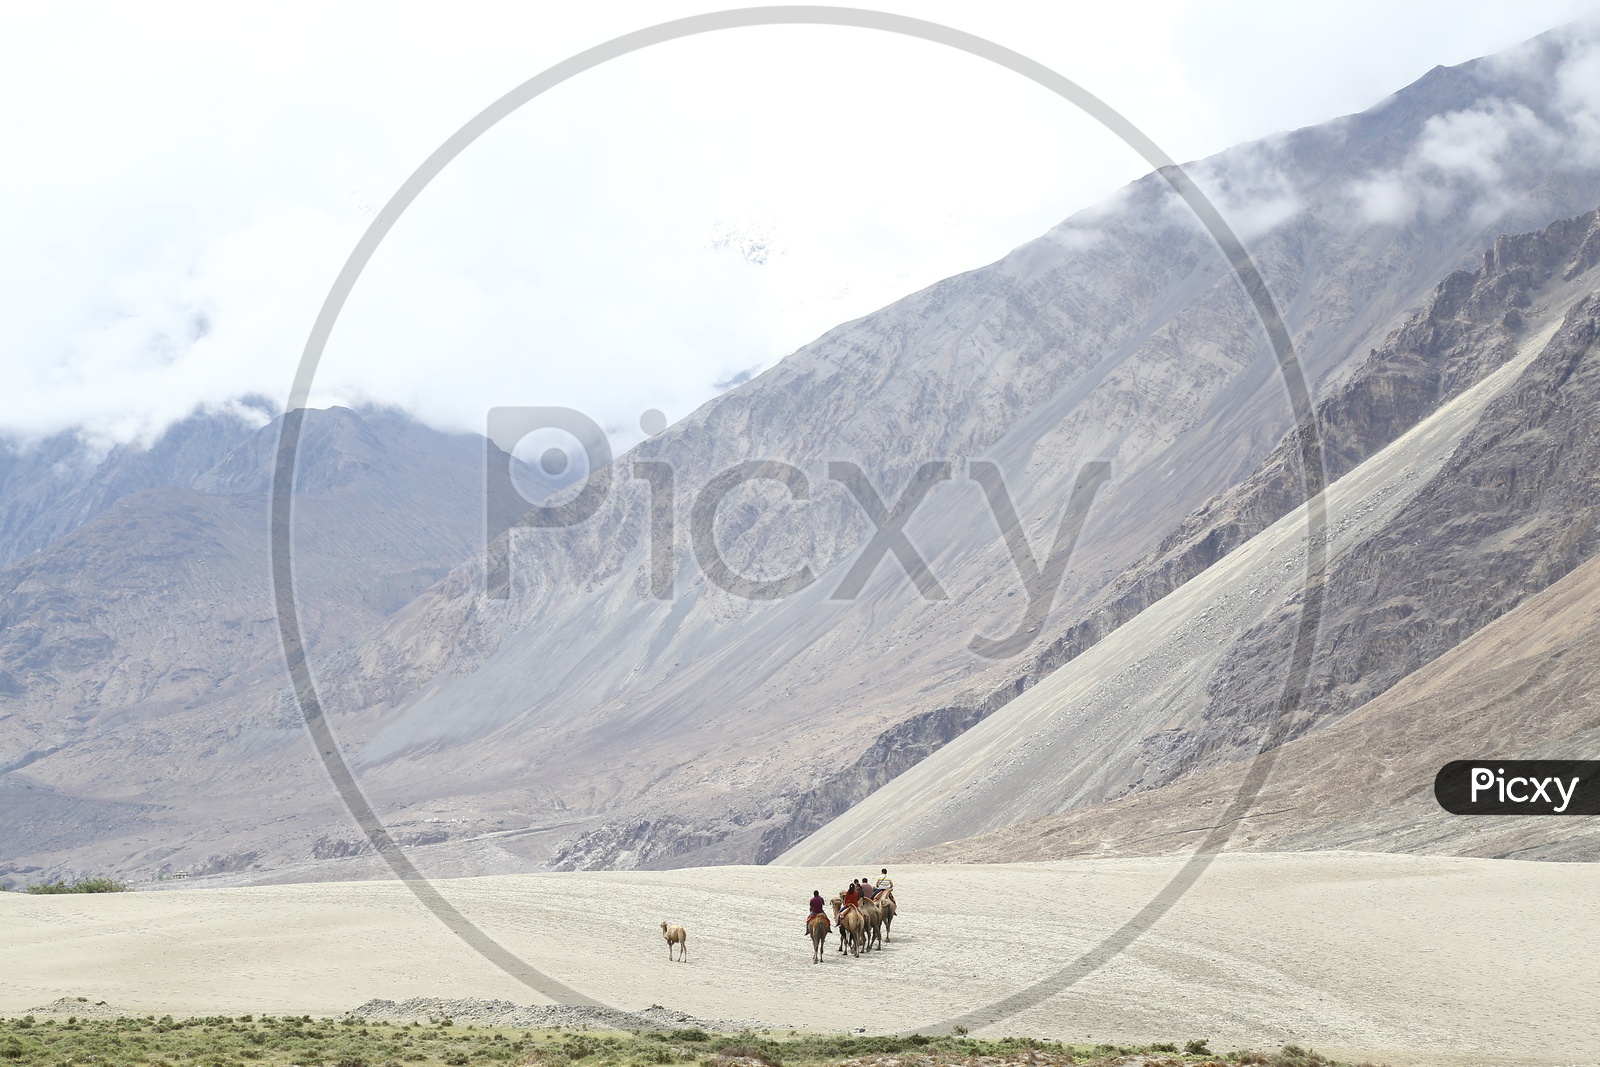 Bactrian camels in Sand Dunes, Nubra Valley